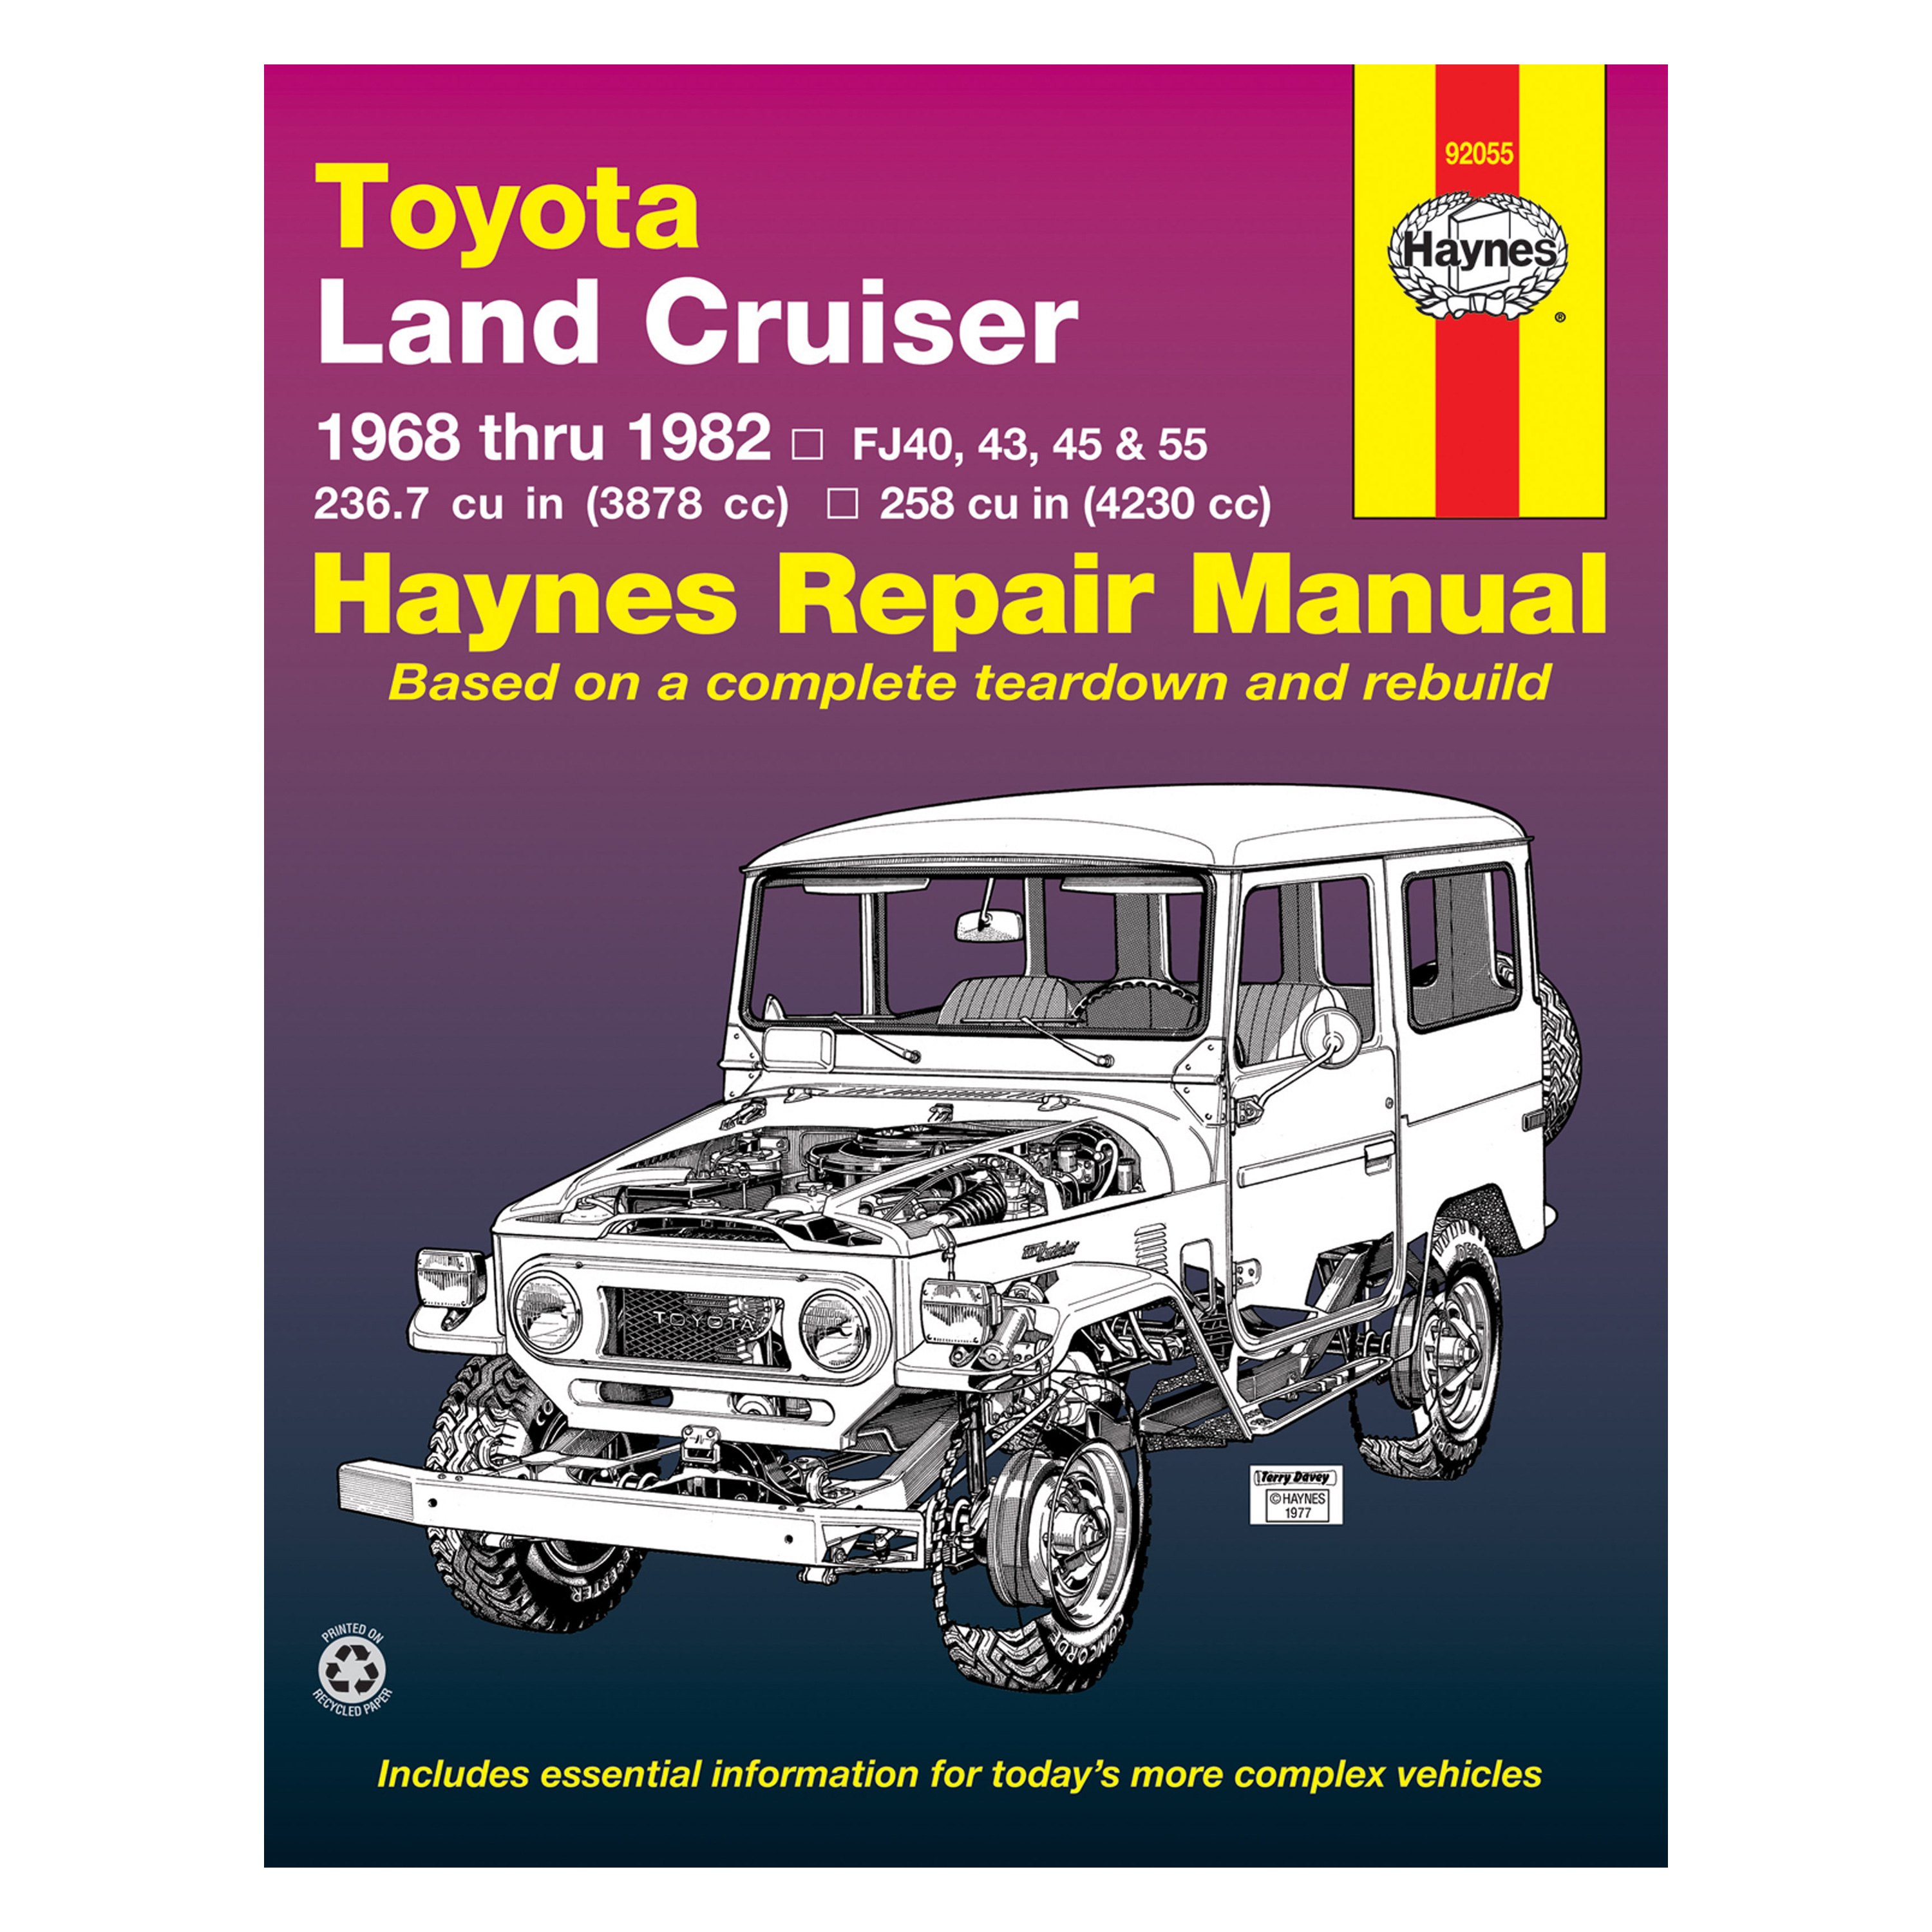 Haynes 0907 Car Maintenance Service Repair Manual